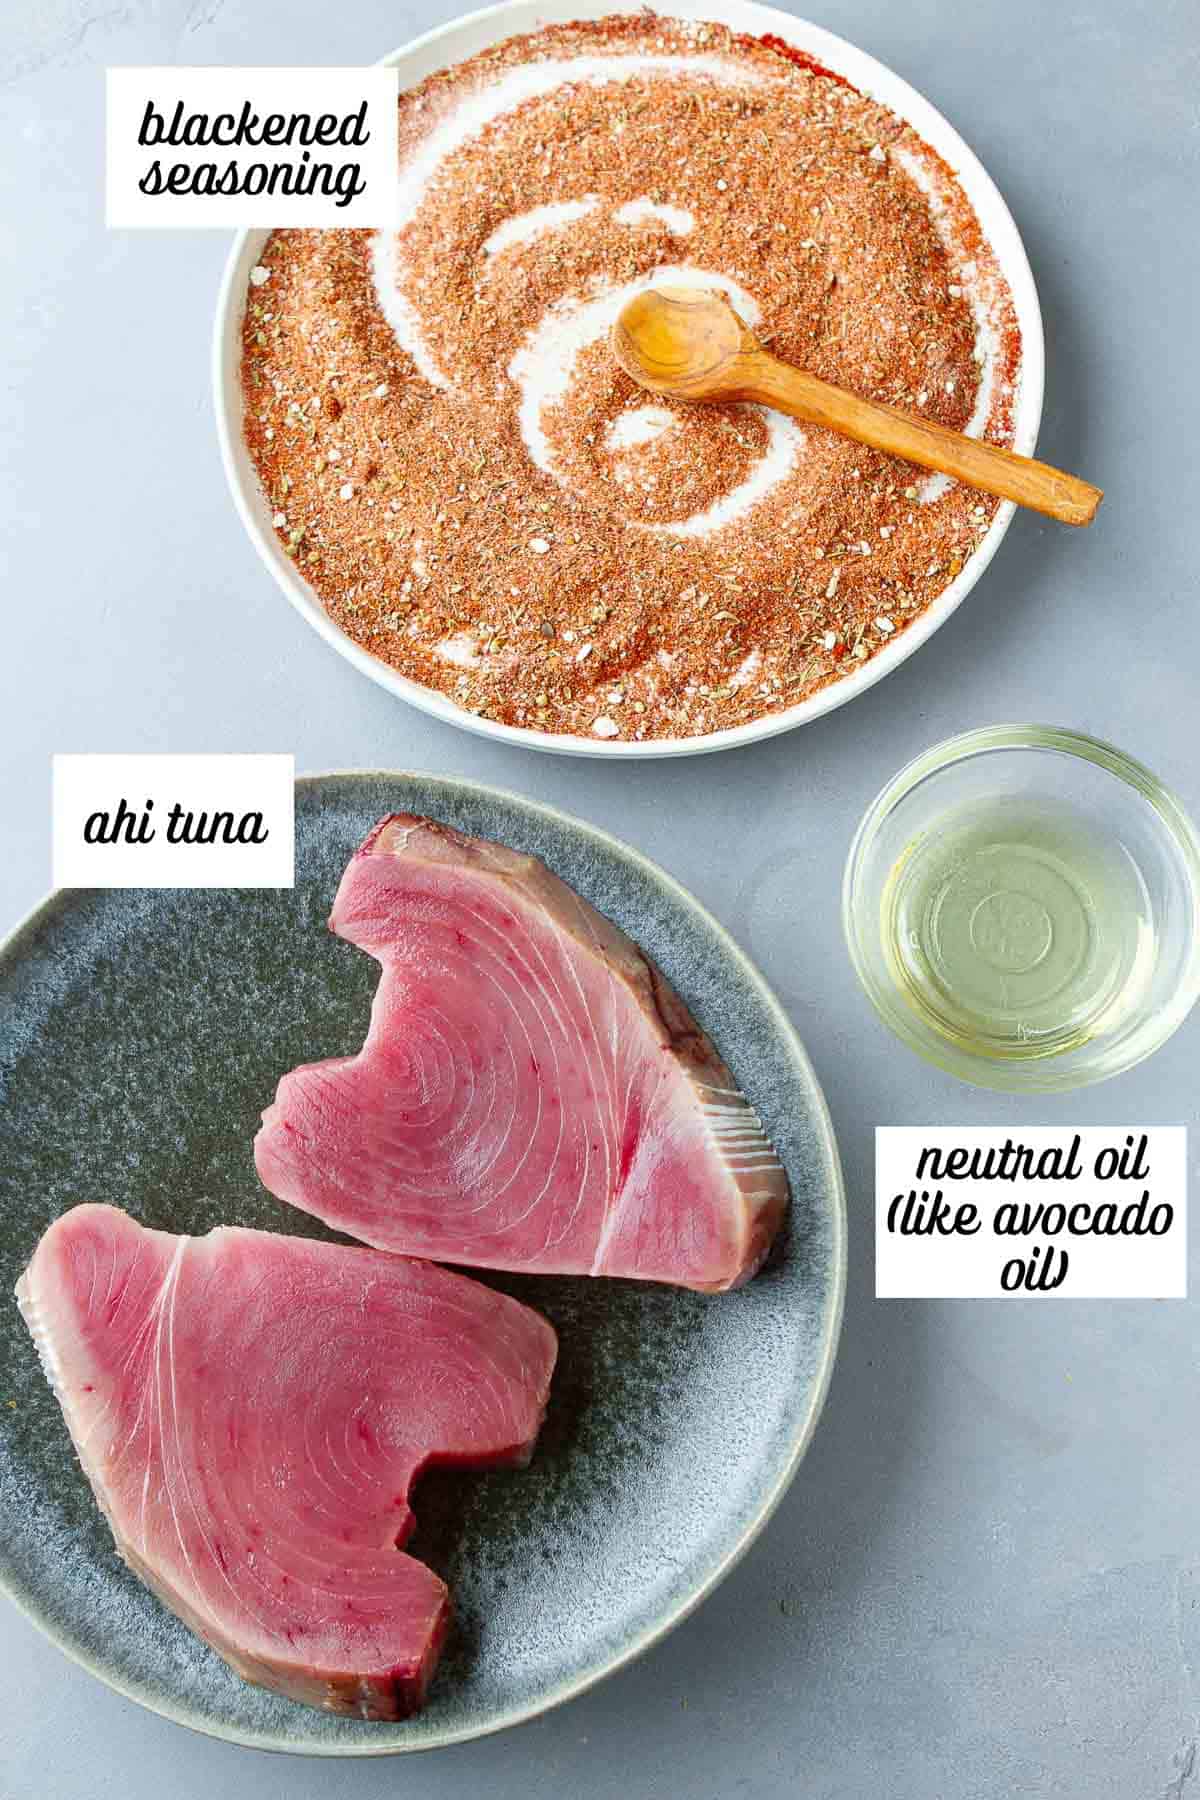 Labeled ingredients for blackened ahi tuna.